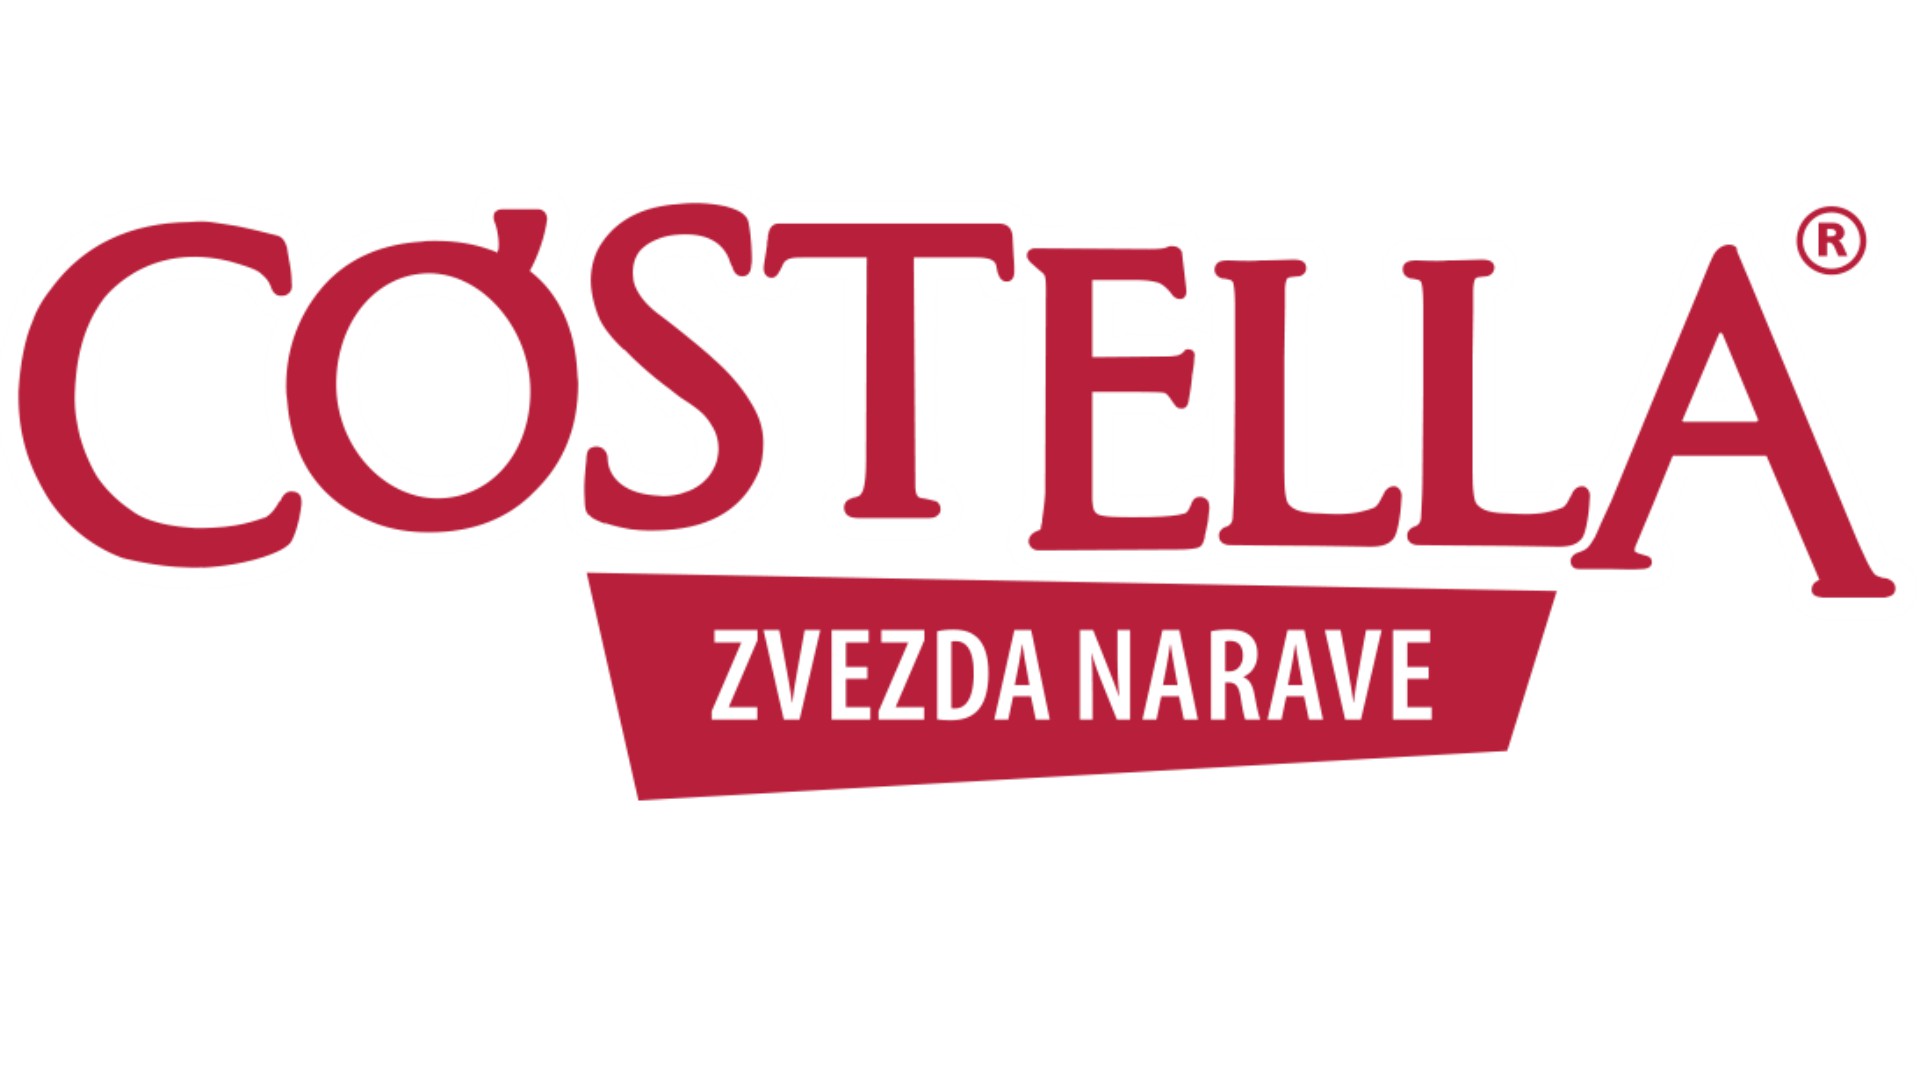 costella-slovenija.jpg